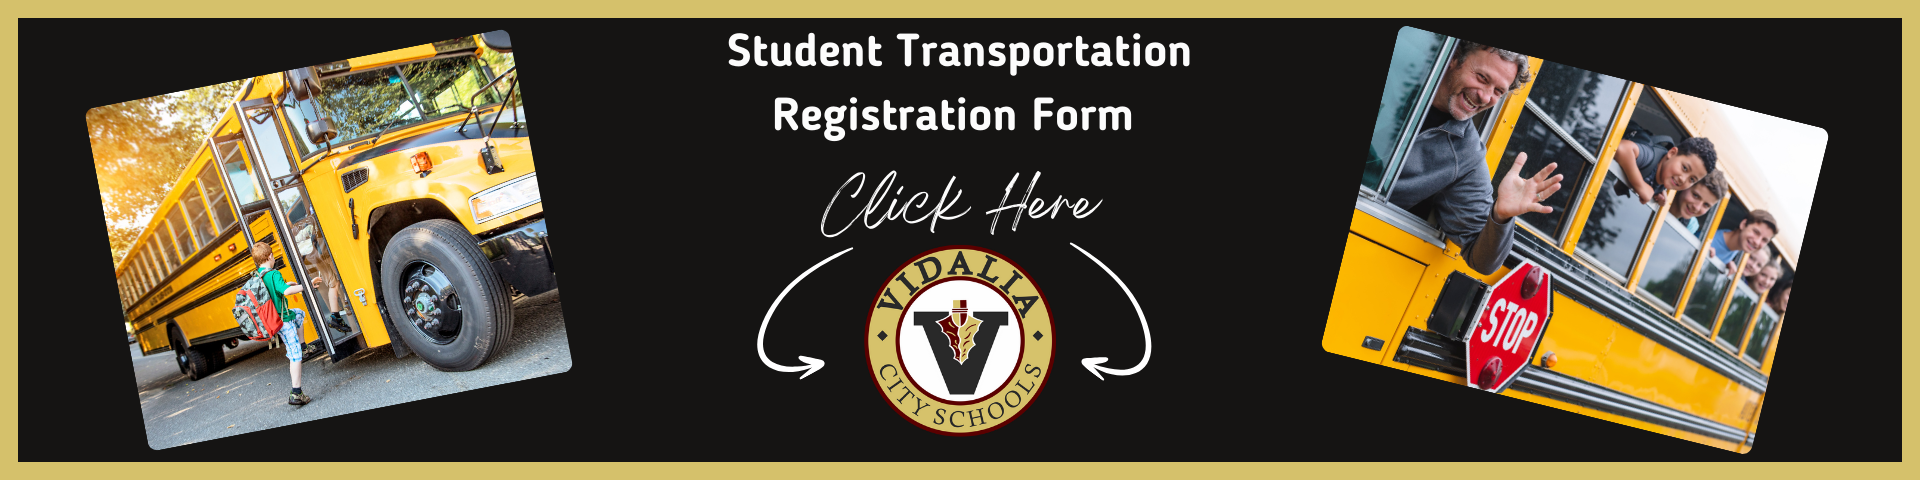 Student Transportation Registration Form